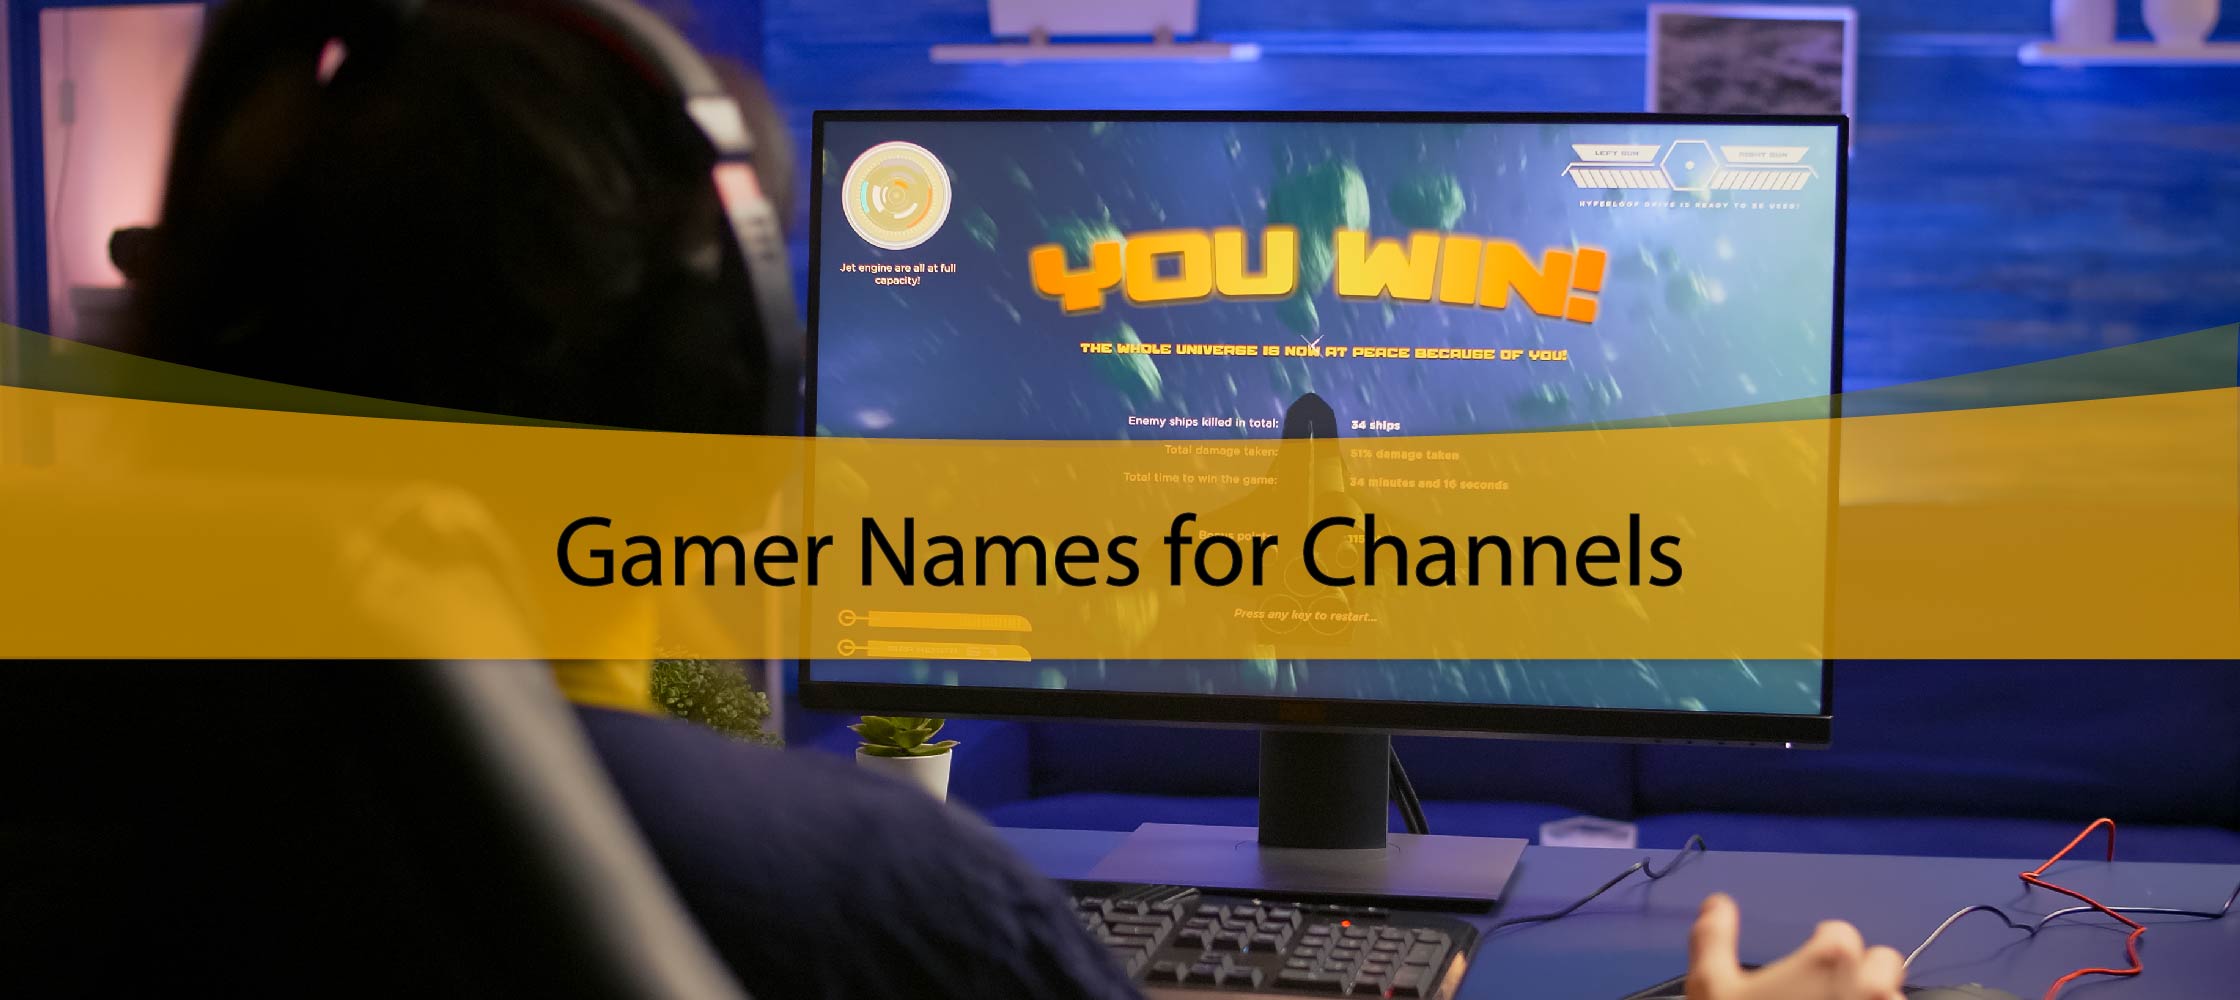 Gamer Names for Channels